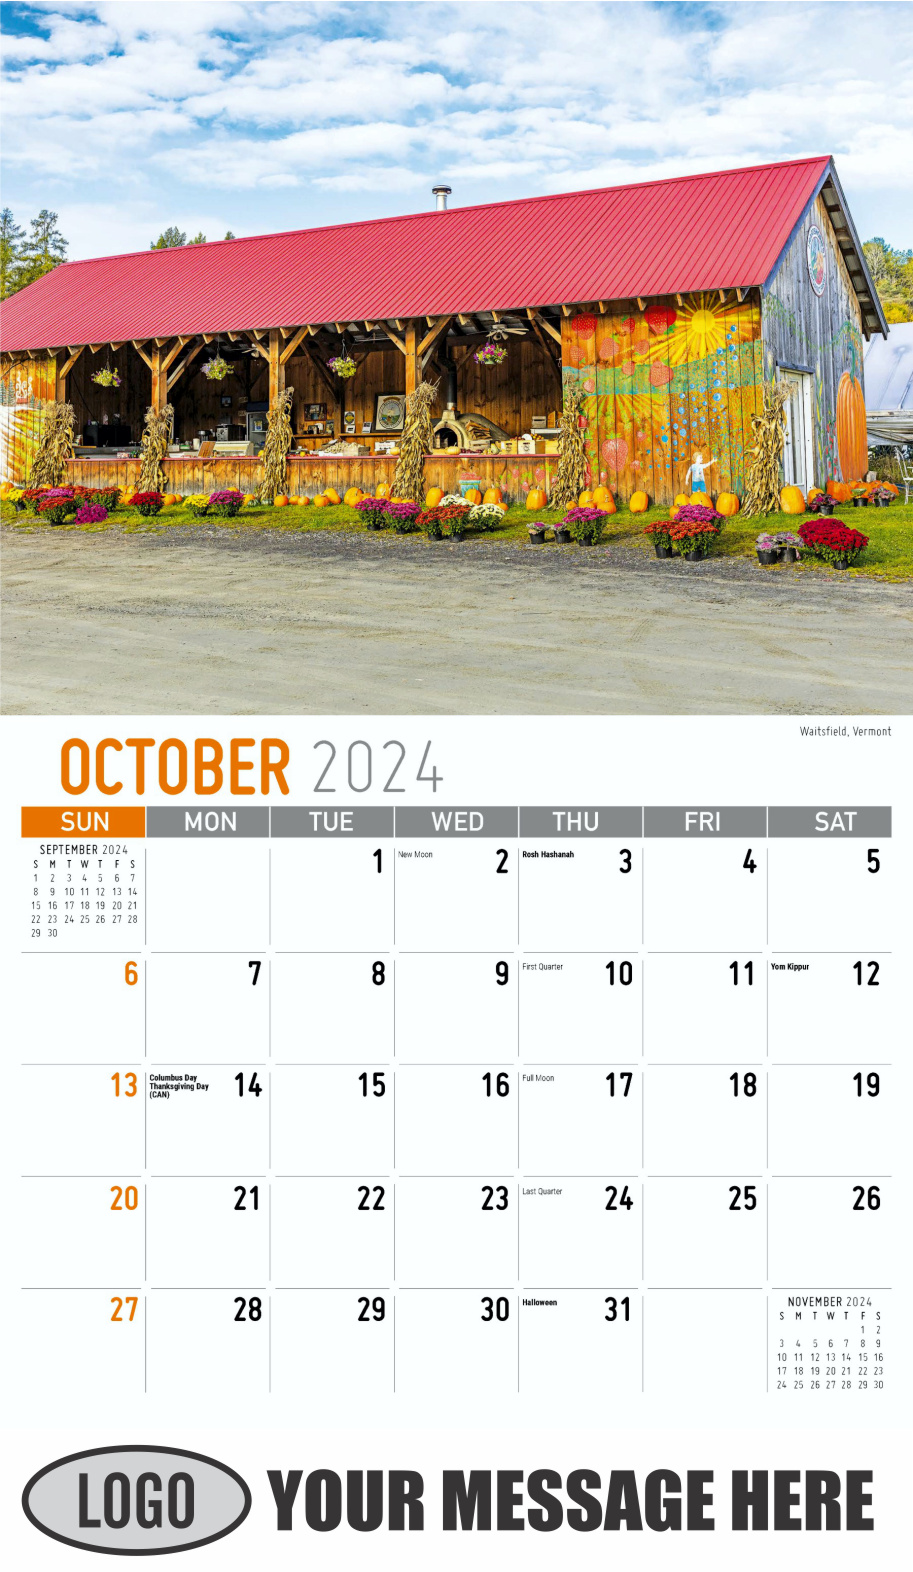 Scenes of New England 2024 Business Advertising Wall Calendar - October